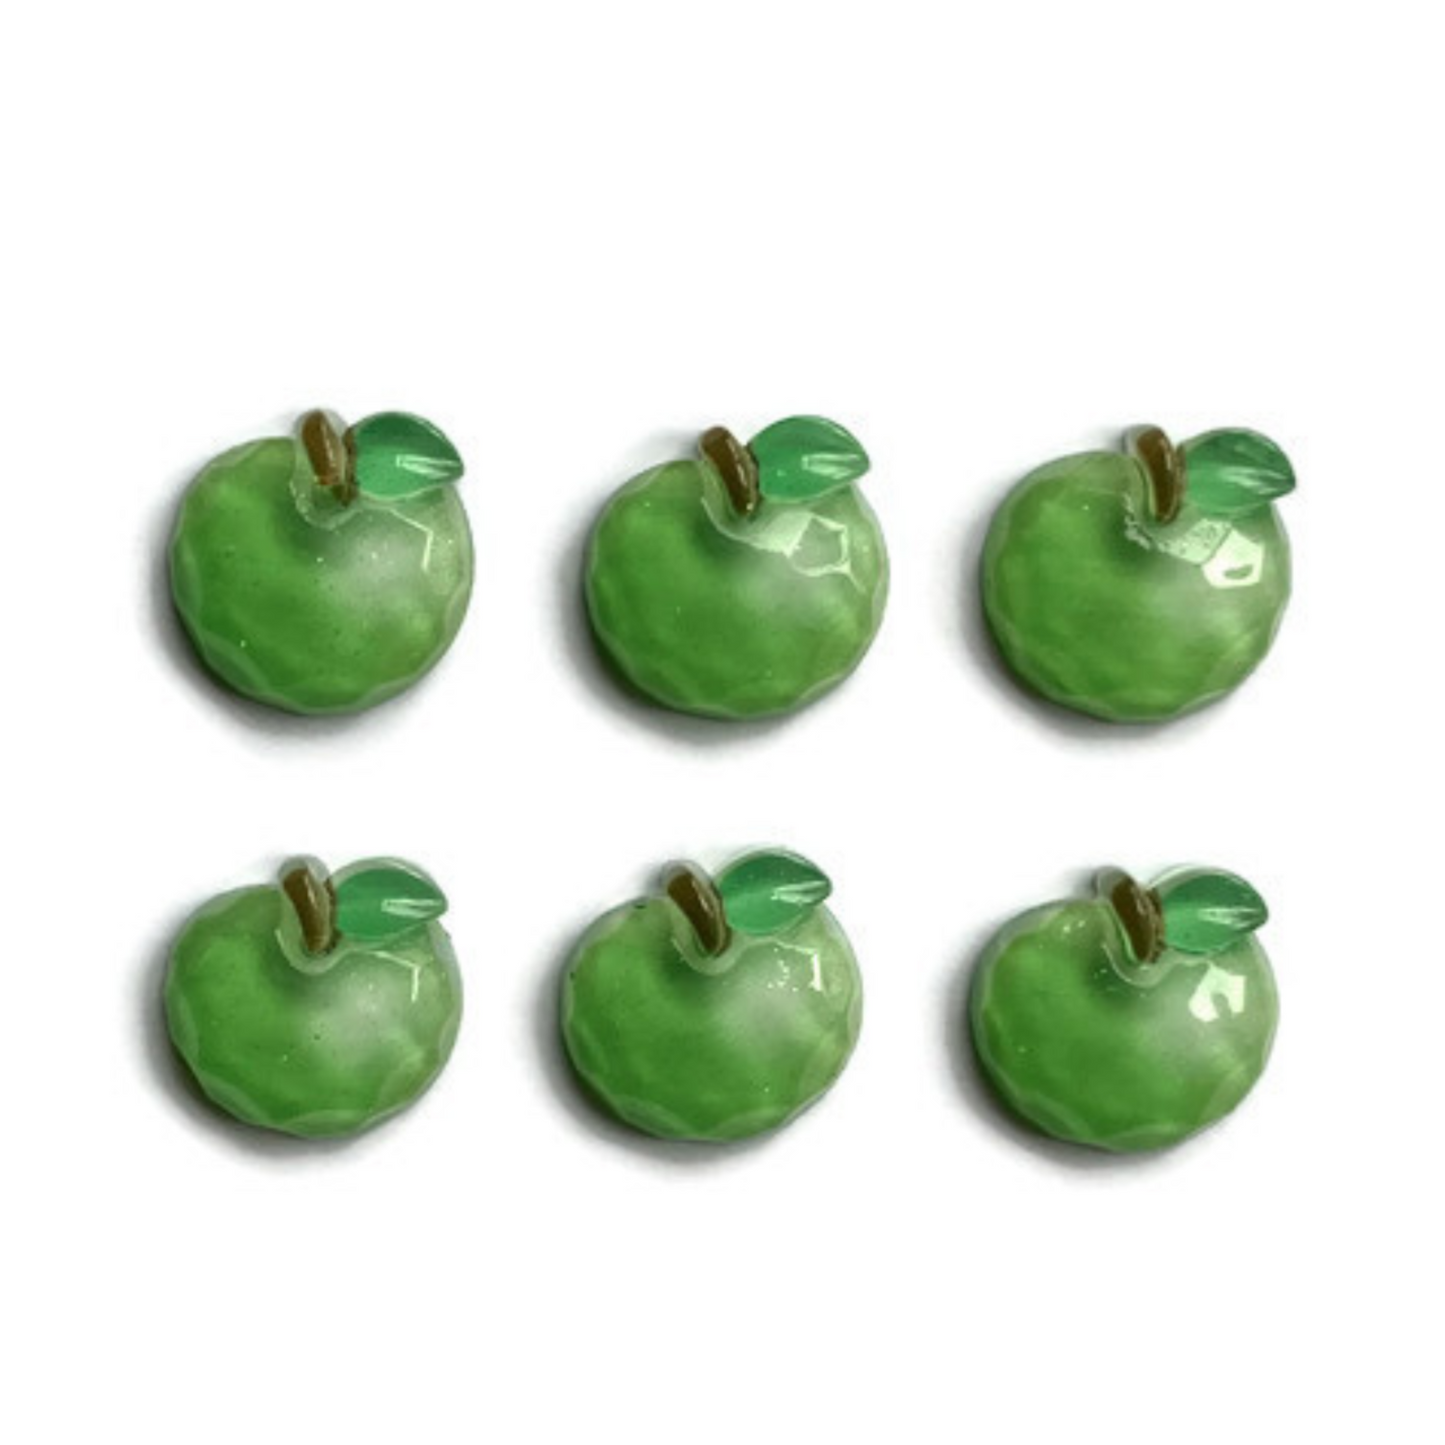 Green Apple Magnets